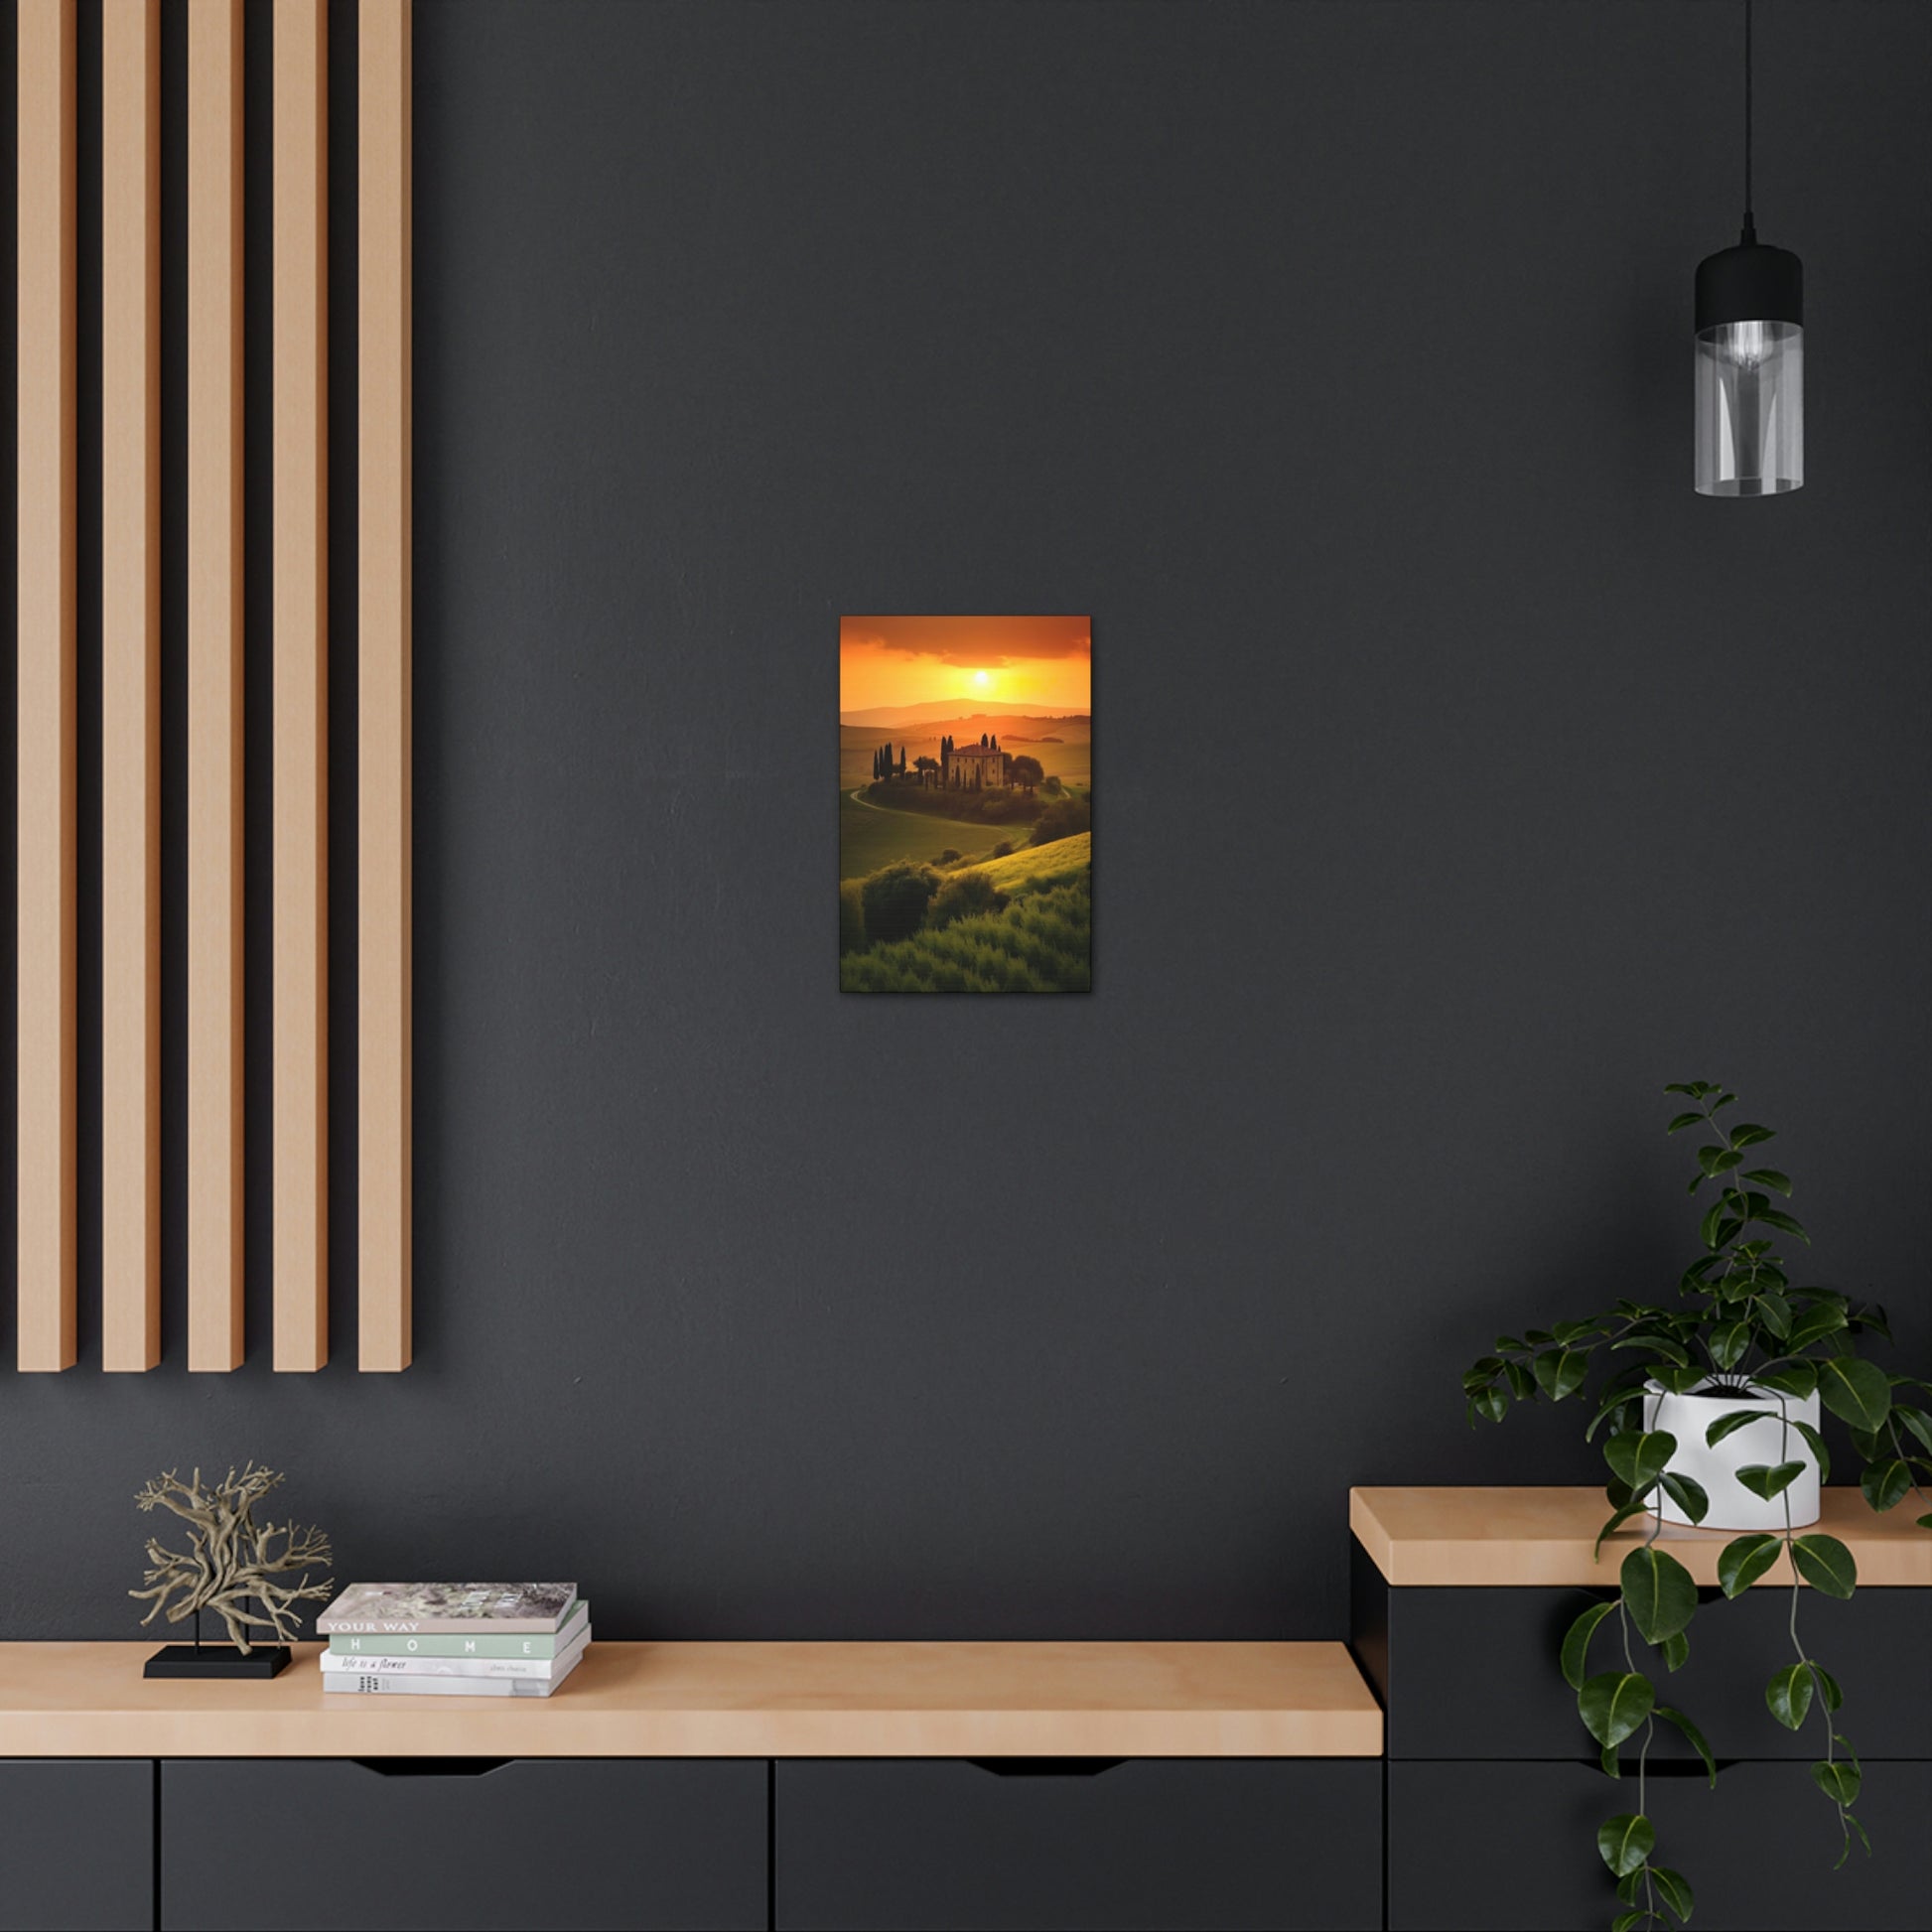 Dark Slate Gray Tuscan Sunset: Canvas Print for Landscape Lovers